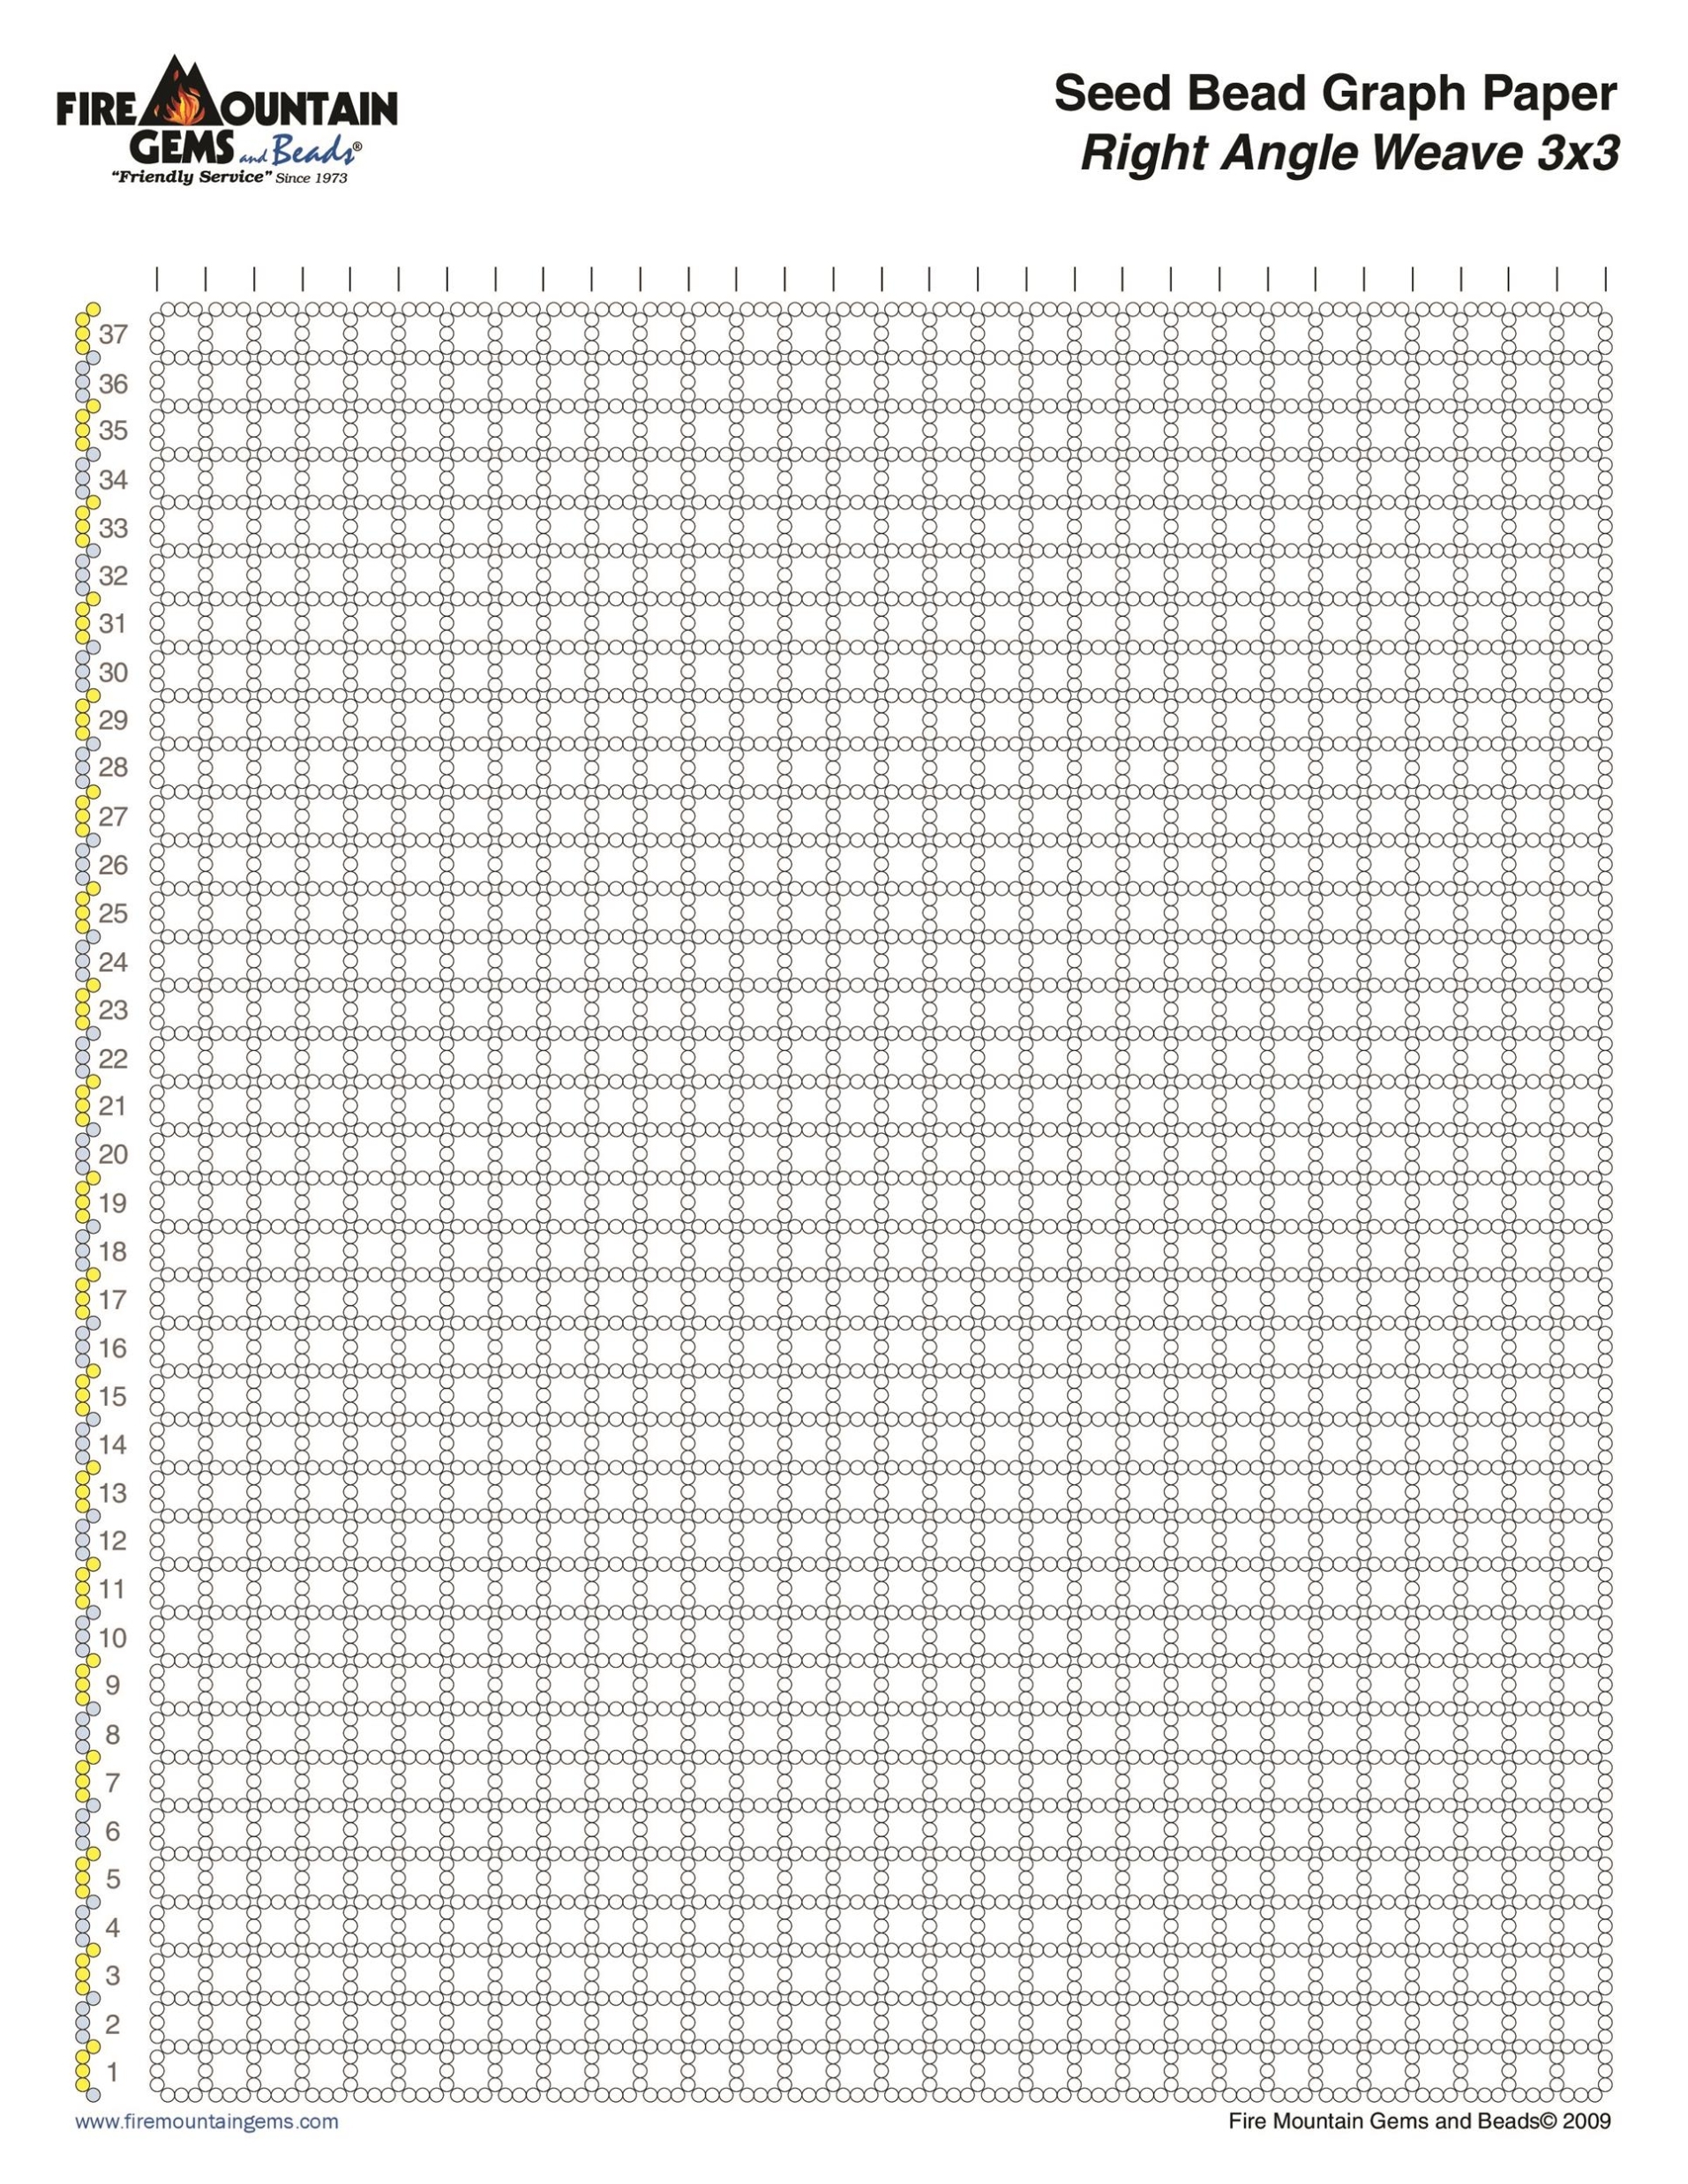 30+ Free Printable Graph Paper Templates (Word, Pdf) ᐅ Templatelab With Graph Paper Template For Word